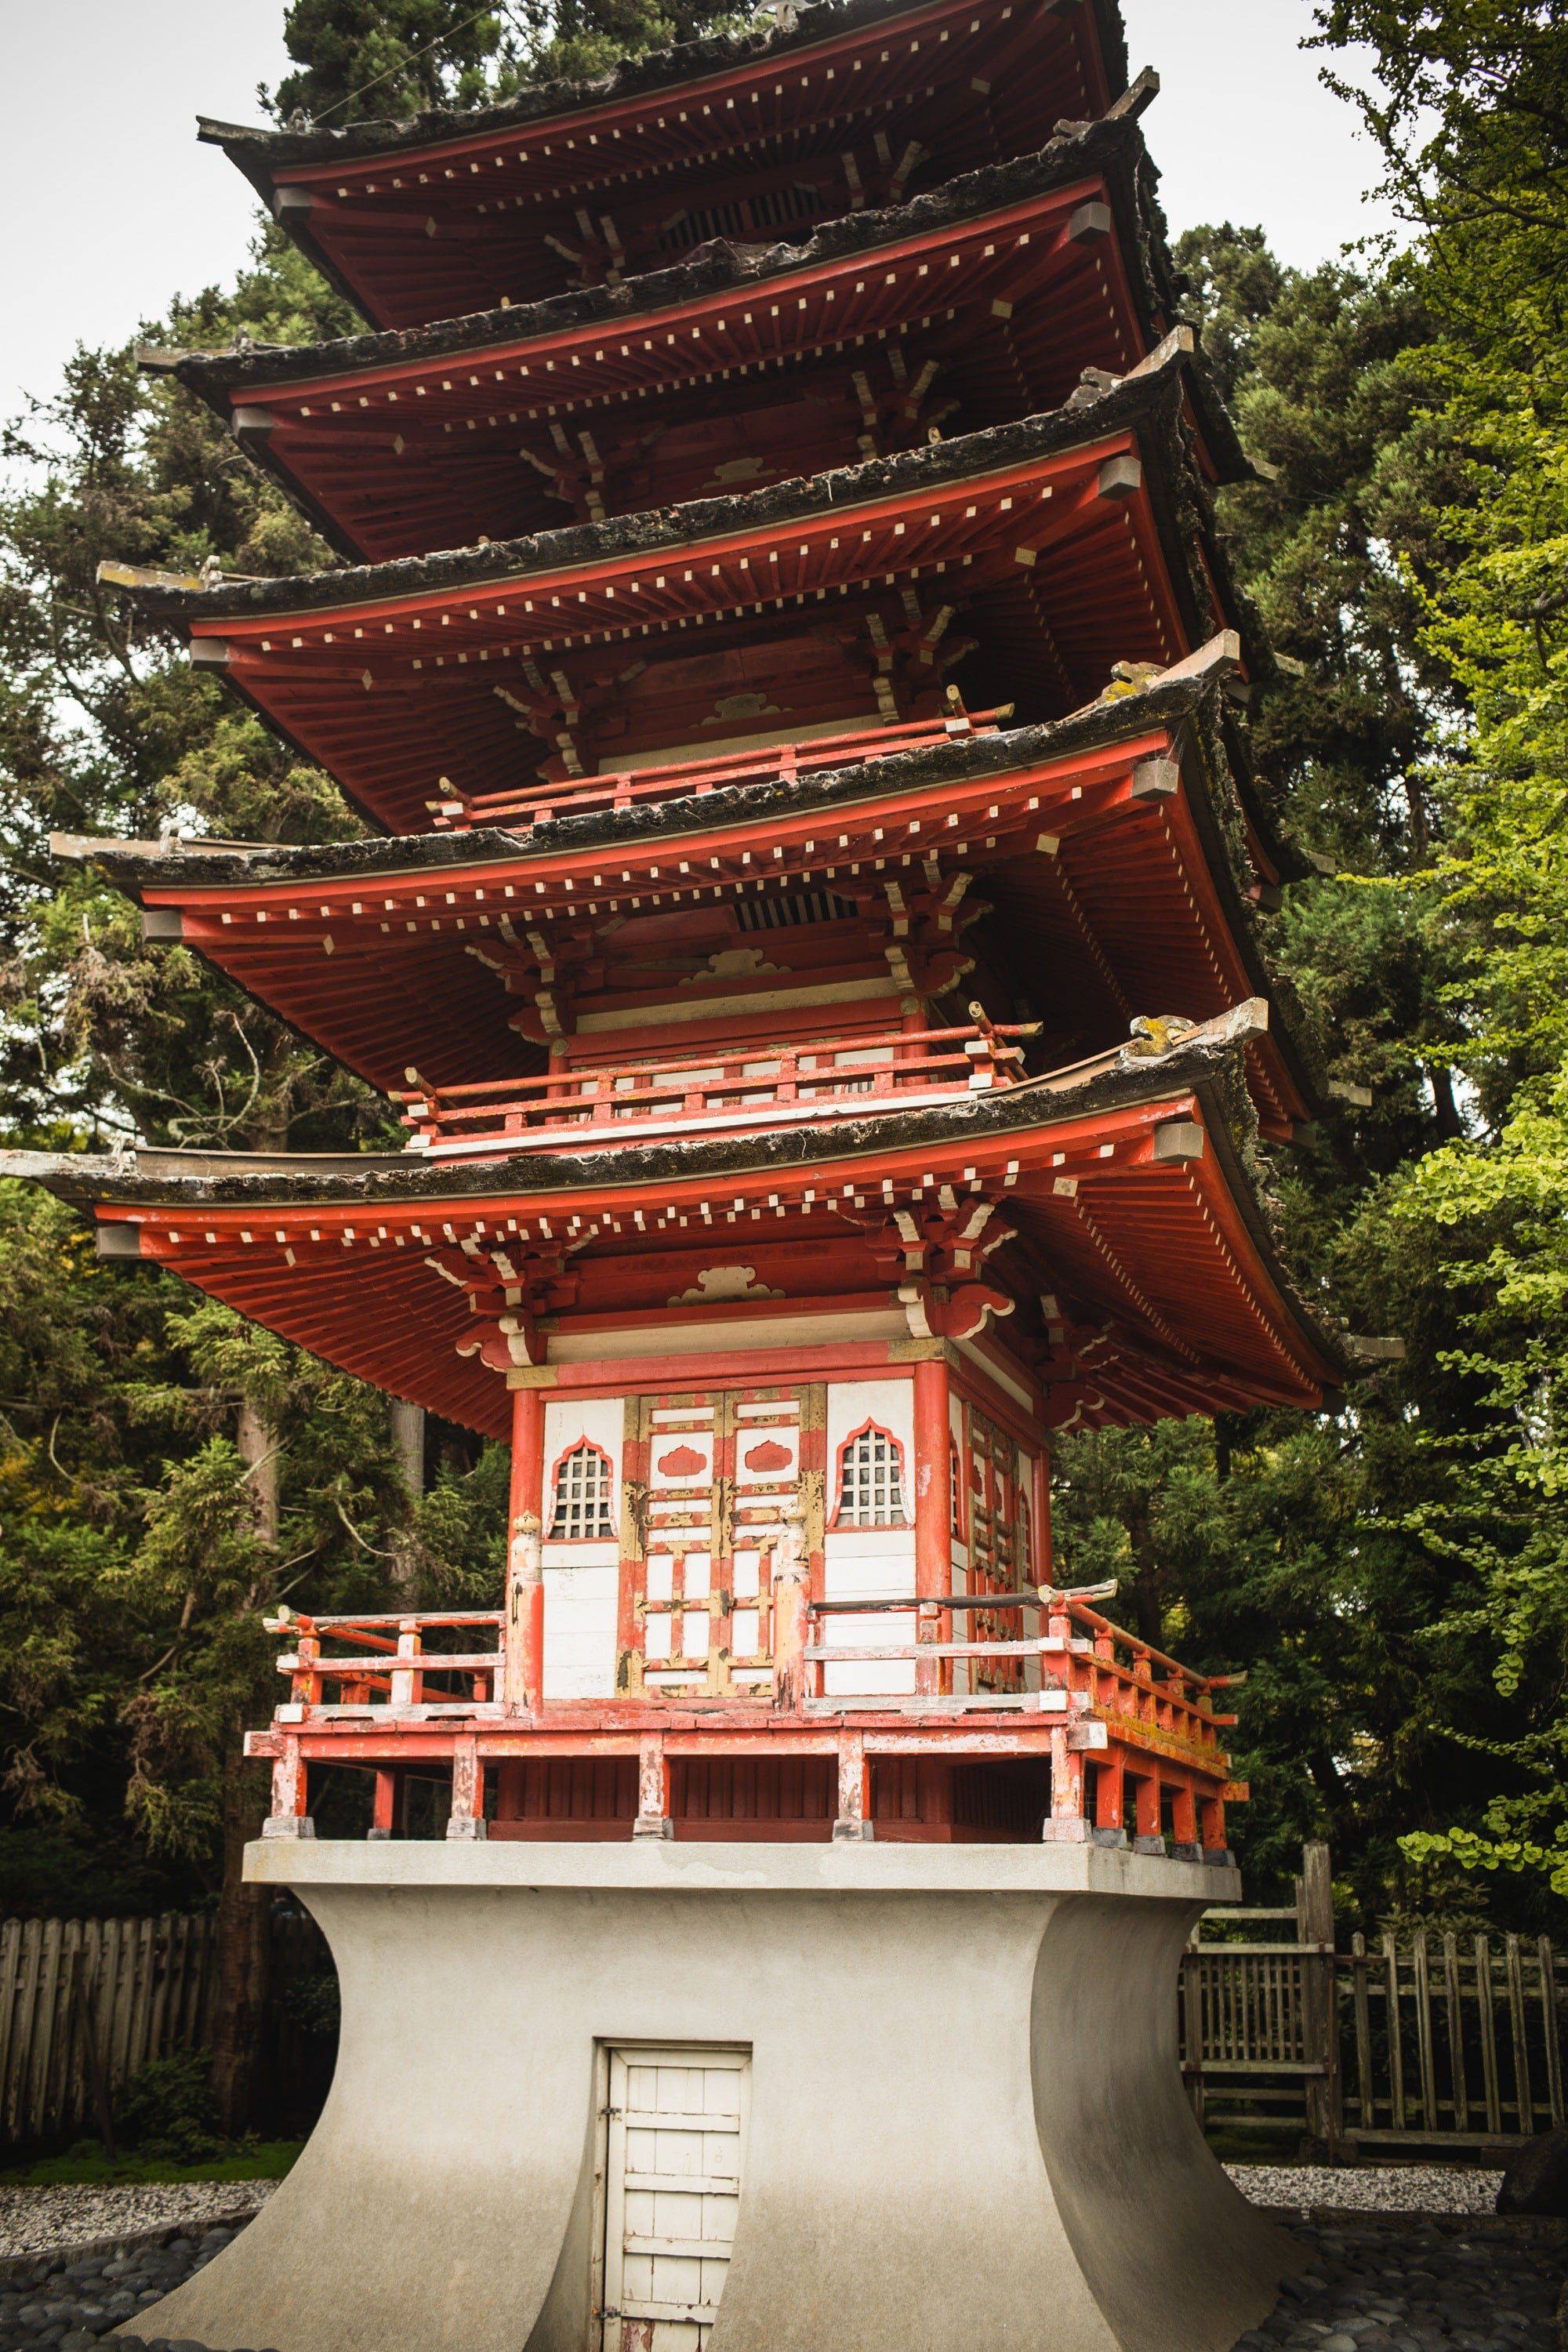 Tower in the Japanese Tea Garden